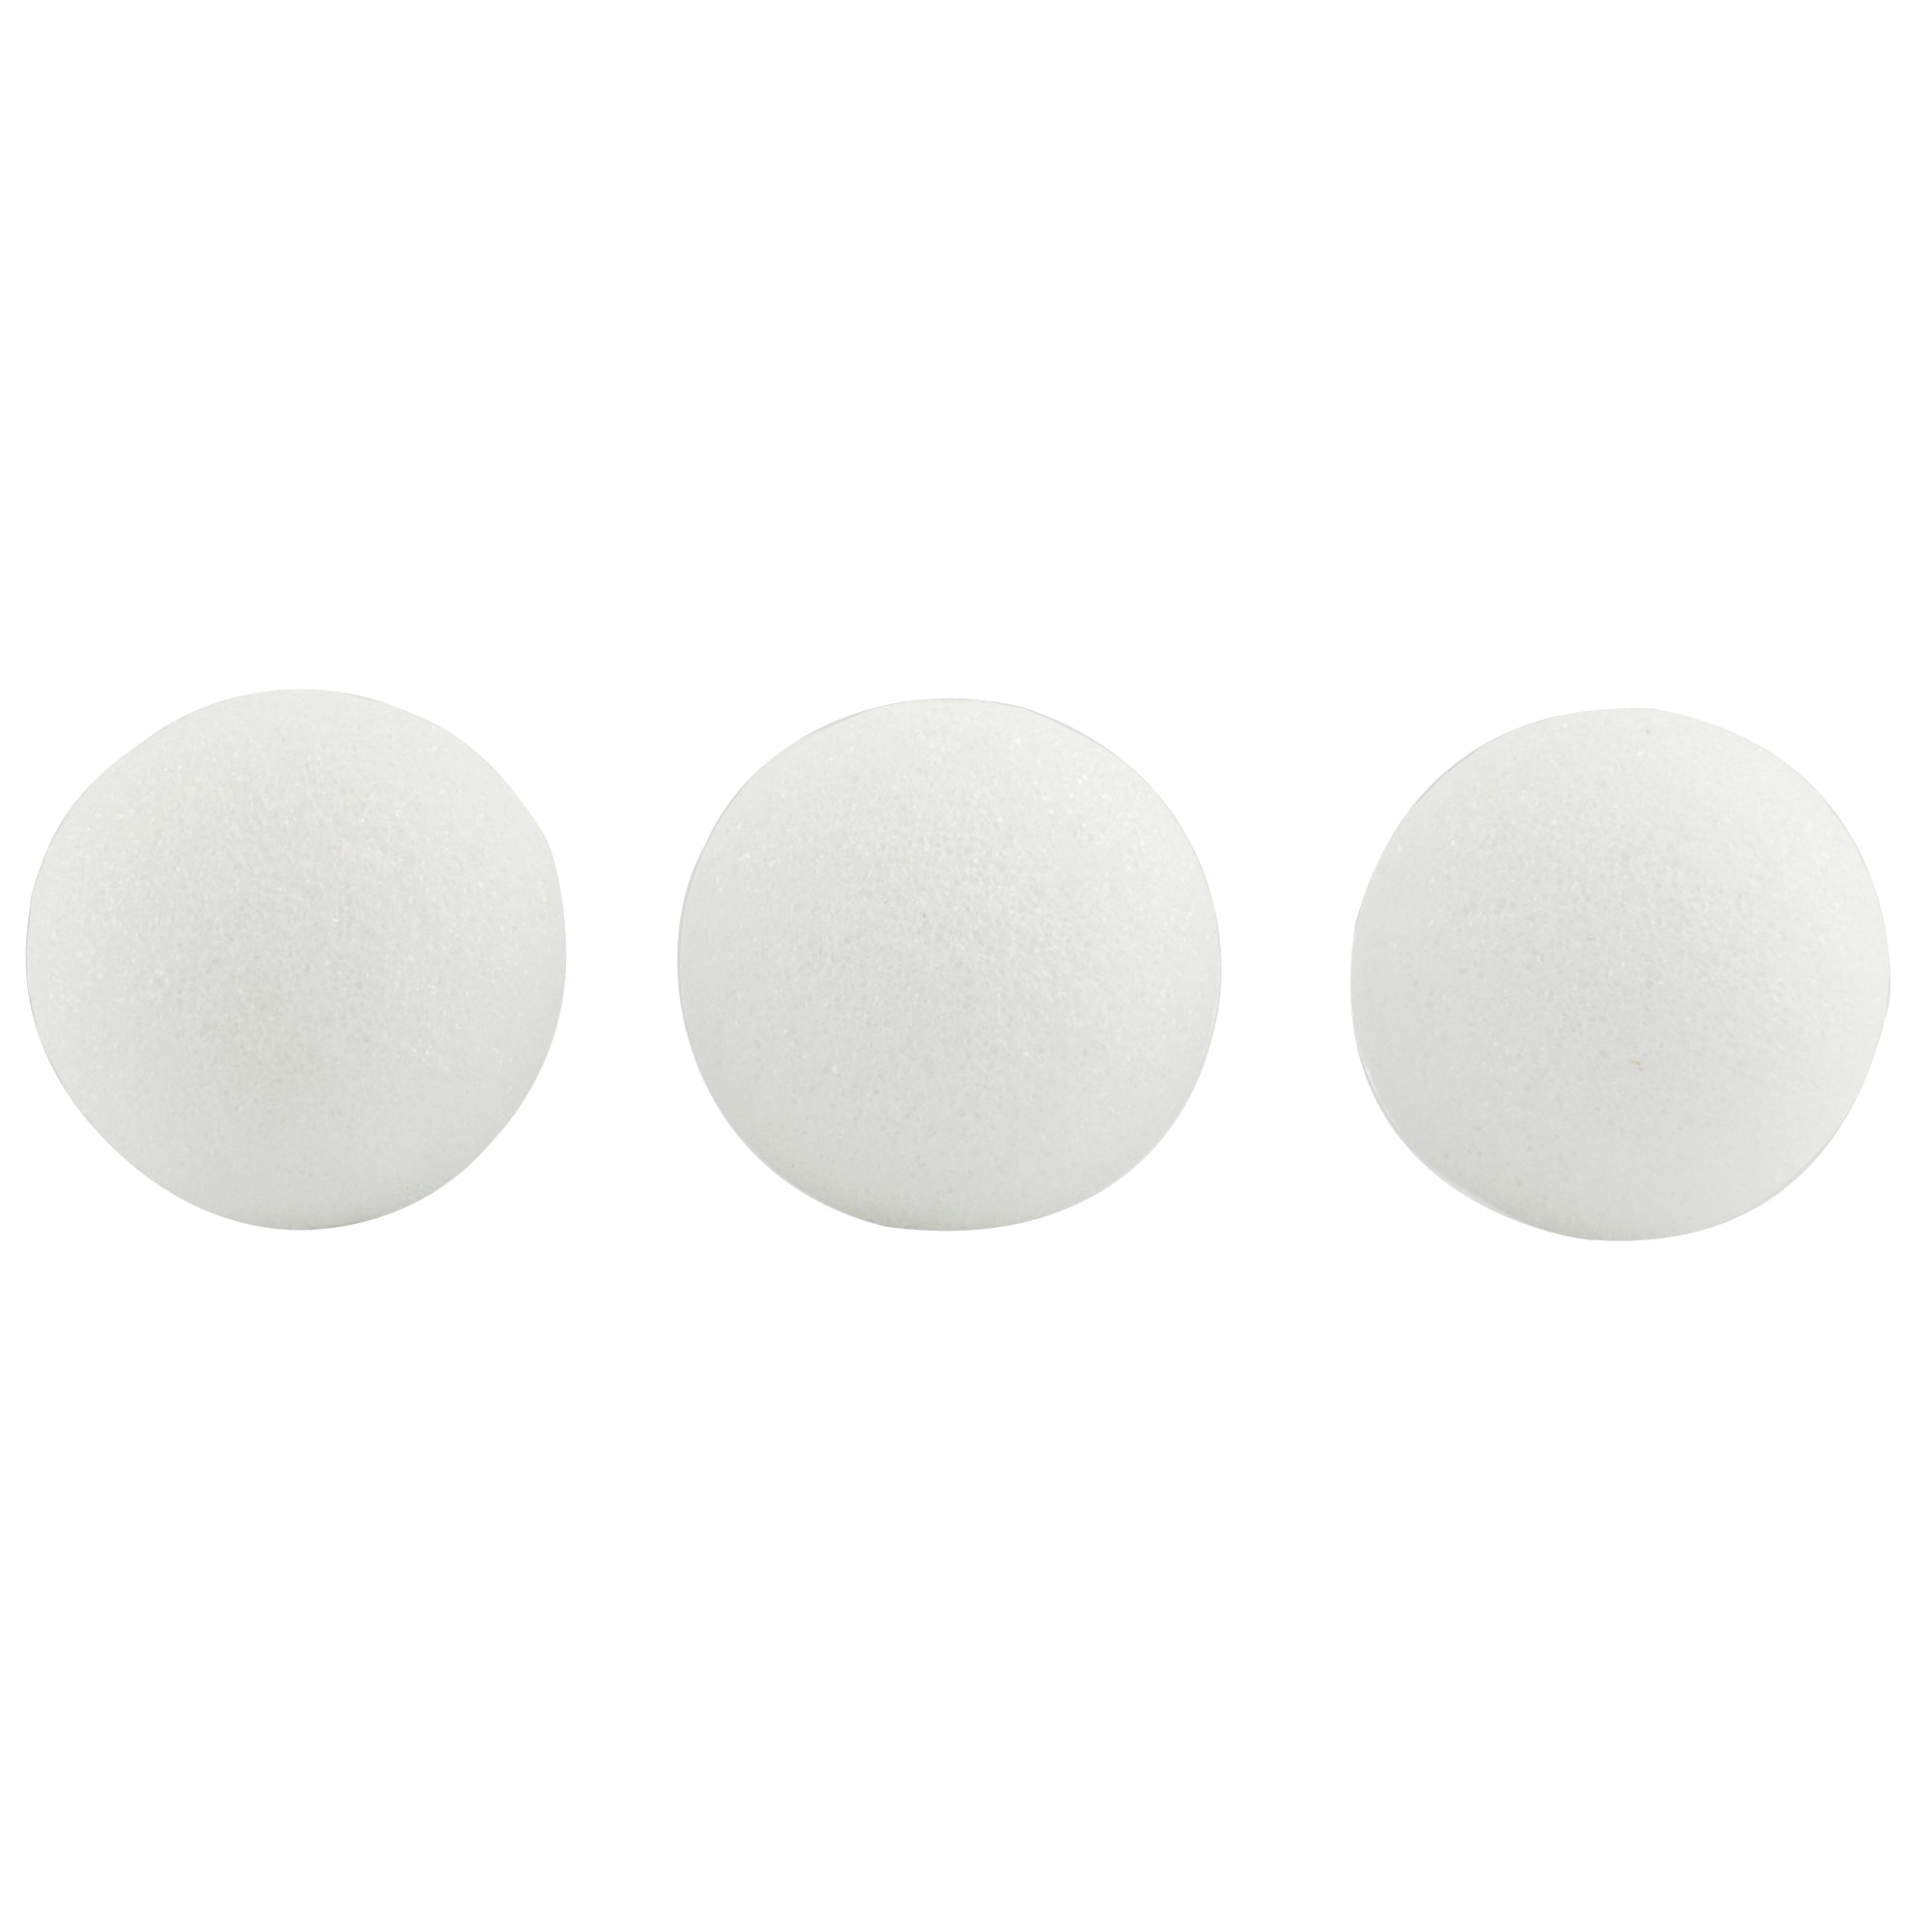 Ball - 2.5 Styrofoam – The Craft Place USA